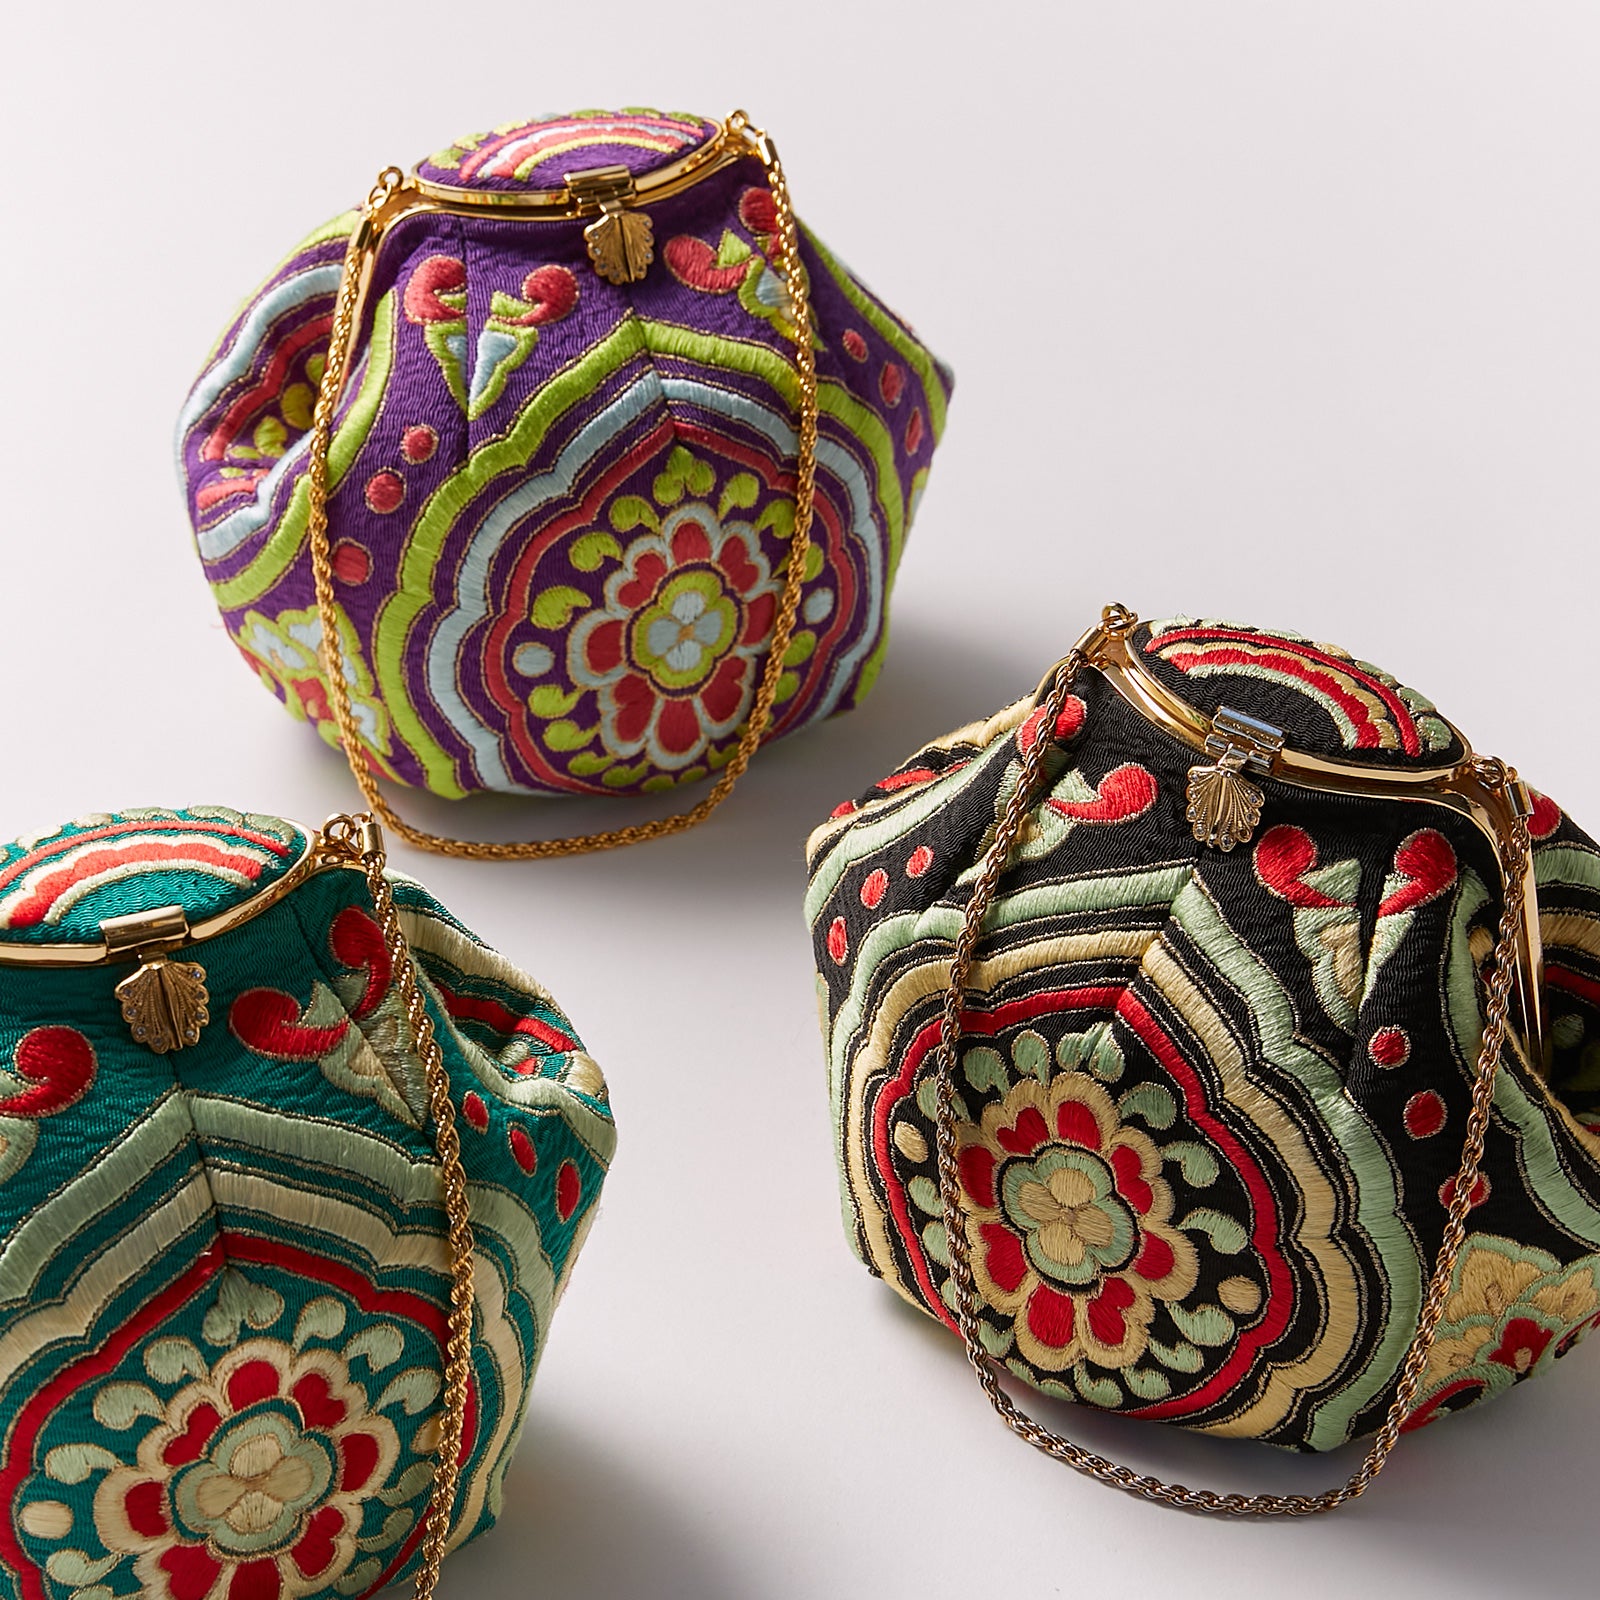 "Embroidered round bag" Japanese accessories Sakura